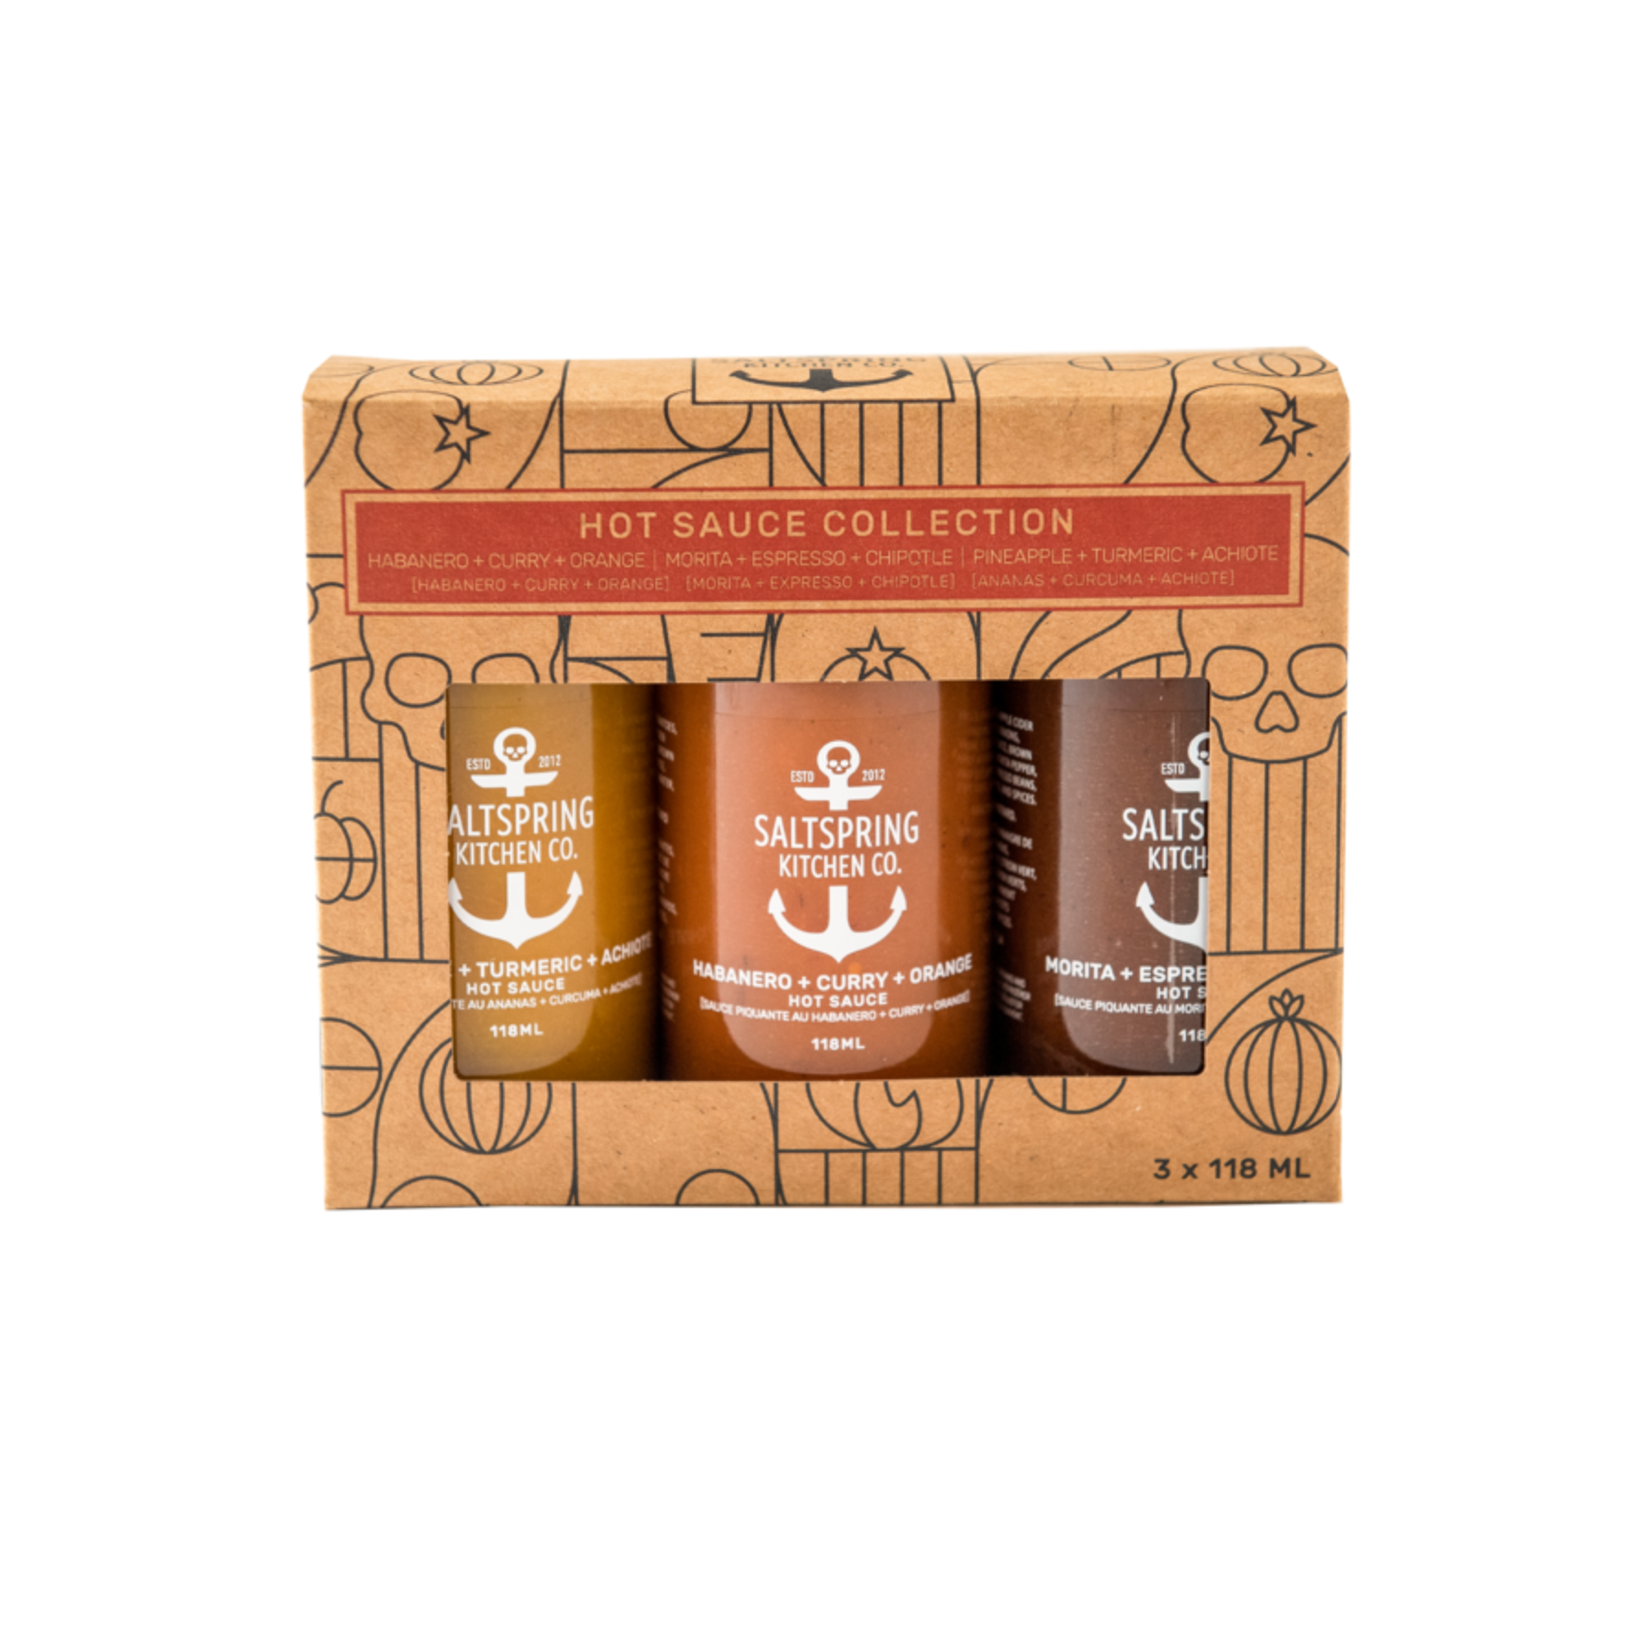 SaltSpring Kitchen Ltd. Hot Sauce Trio Collection Gift Box